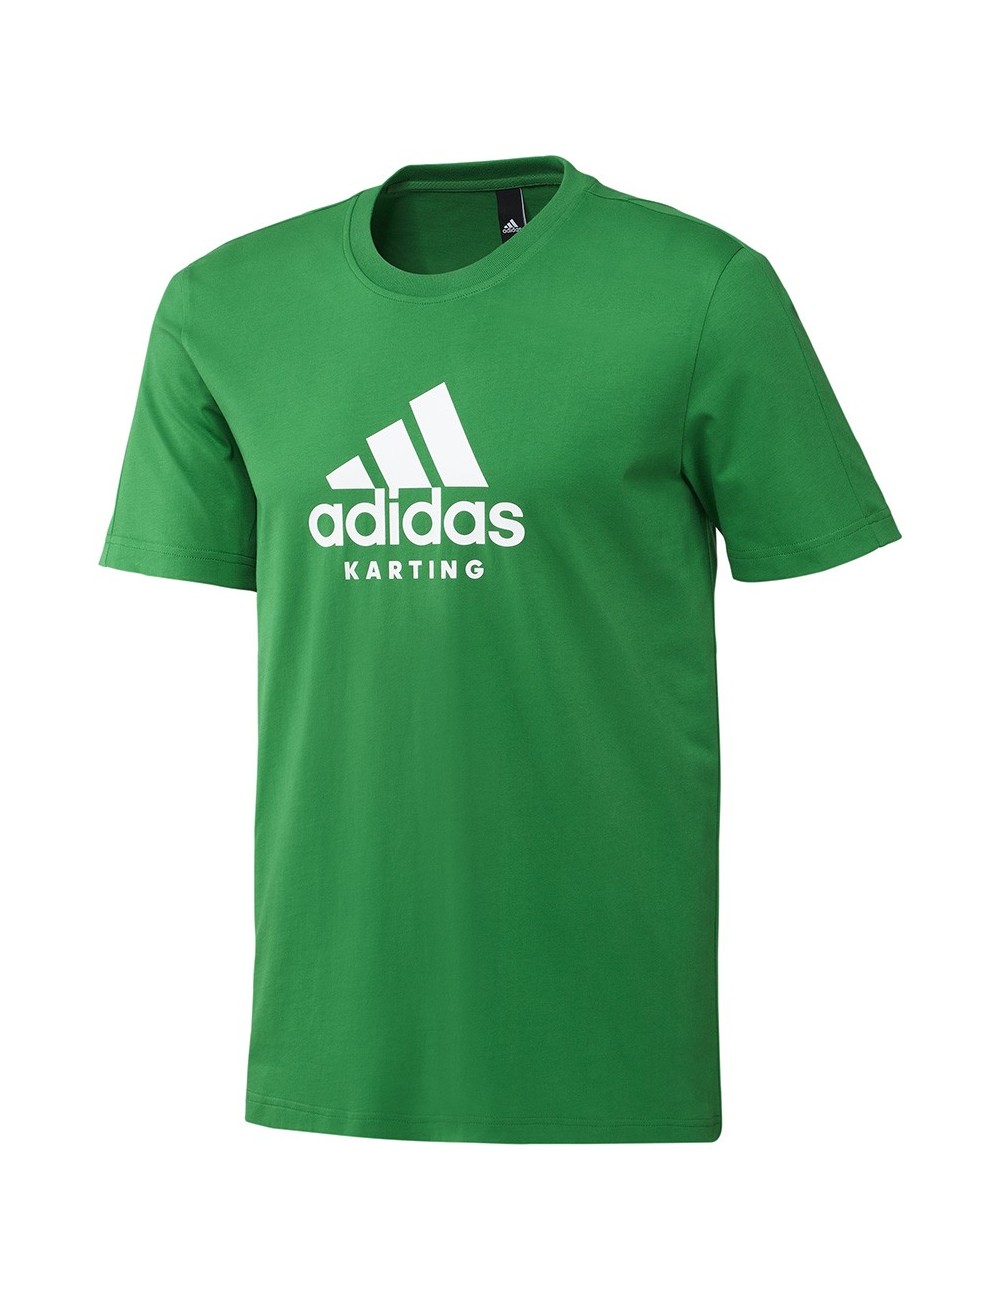 Adidas tee-shirt karting green